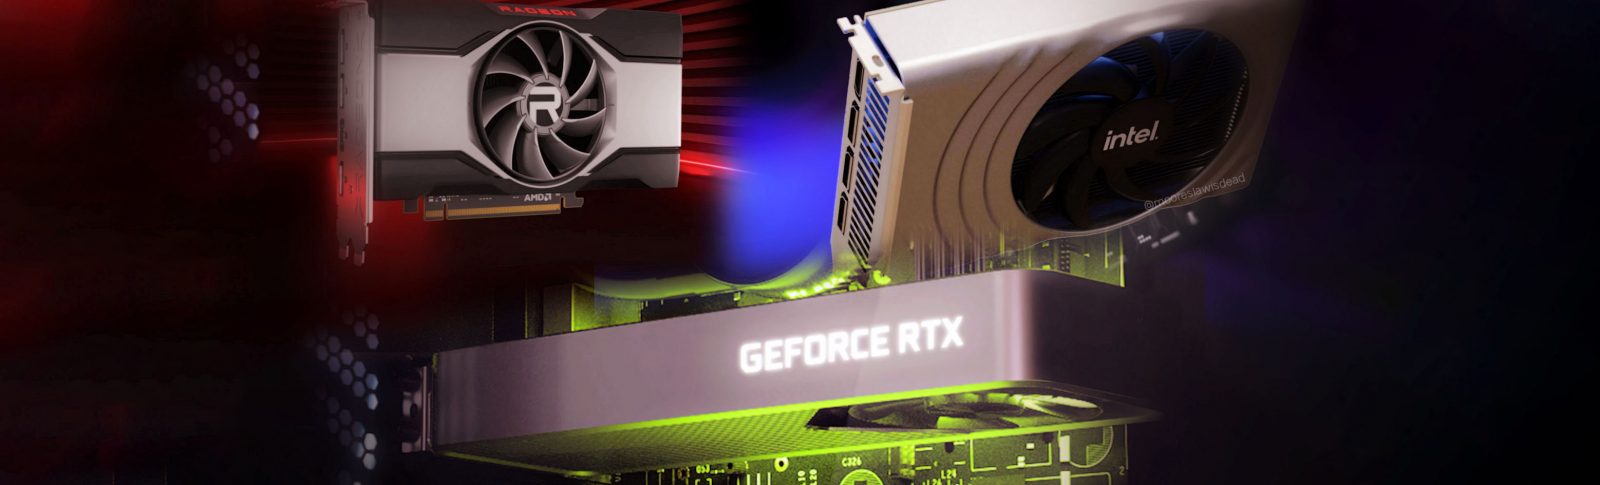 Nvidia GeForce RTX 3050 chega com nova GPU GA107 e 4GB de VRAM GDDR6,  afirma rumor 